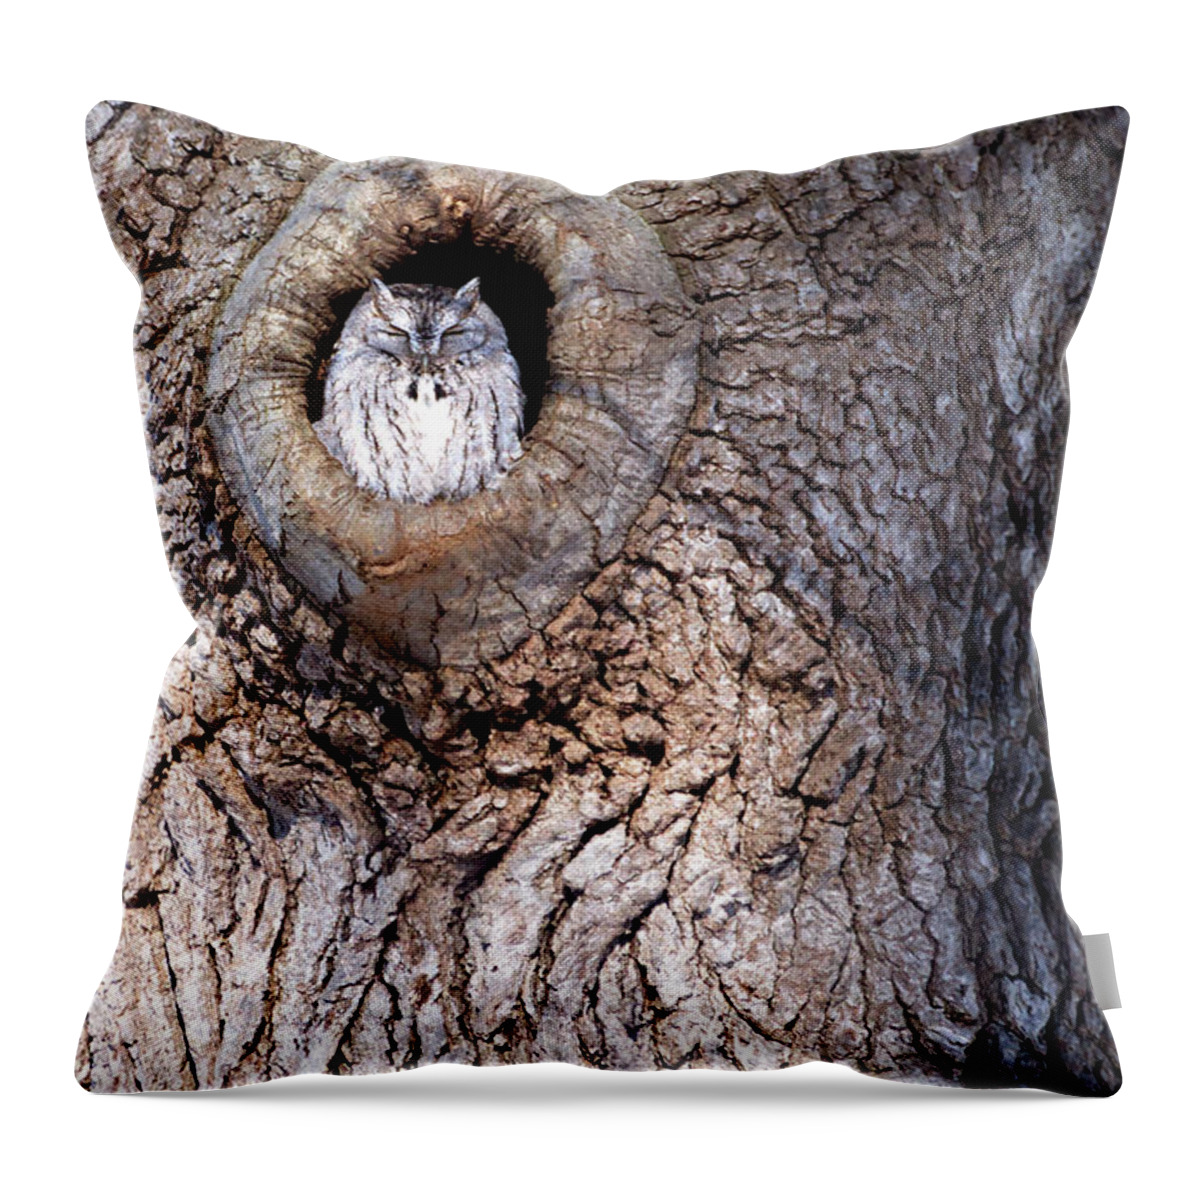 Owl Throw Pillow featuring the photograph Owl Roosting by Flinn Hackett